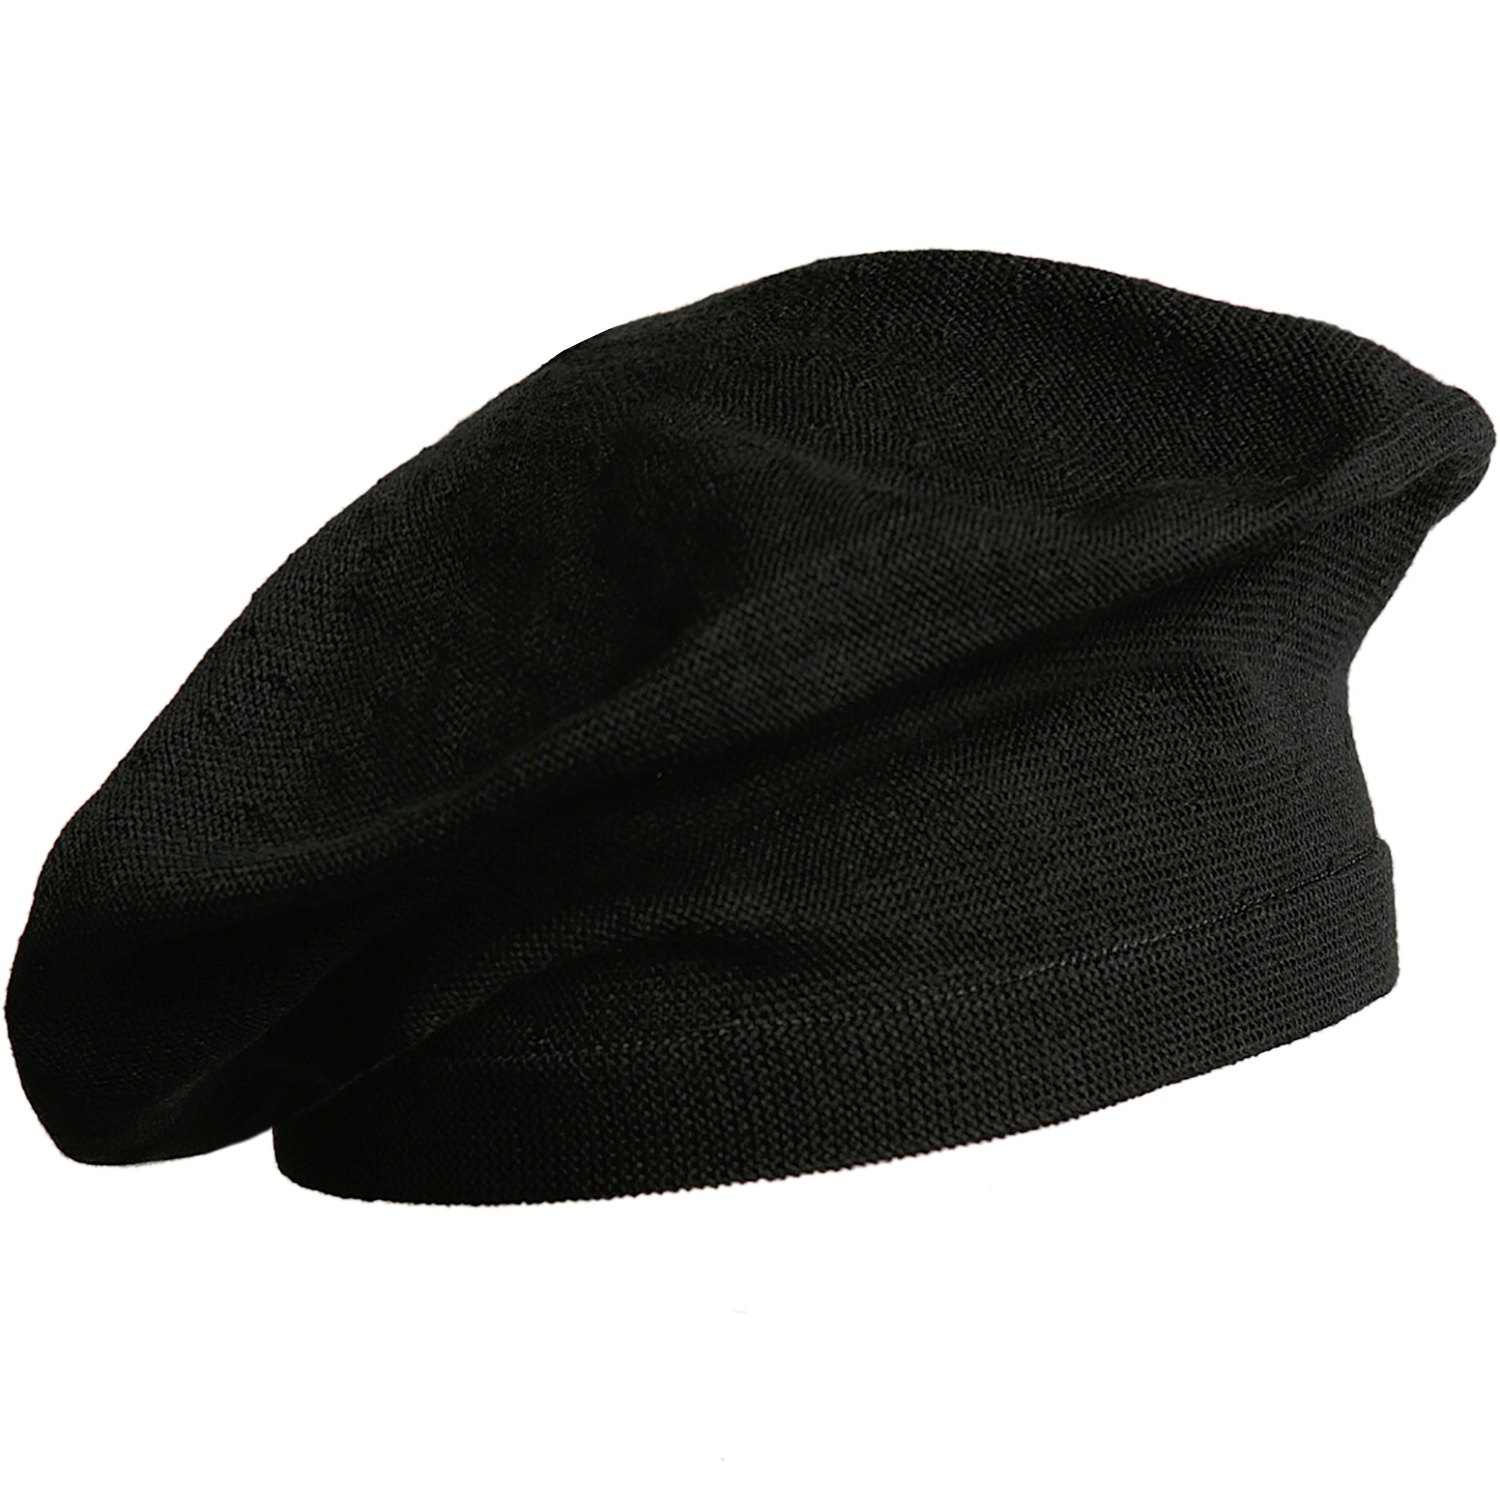 French Beret Hat Png - French Beret Hat Png Hdpng.com 1500, Transparent background PNG HD thumbnail